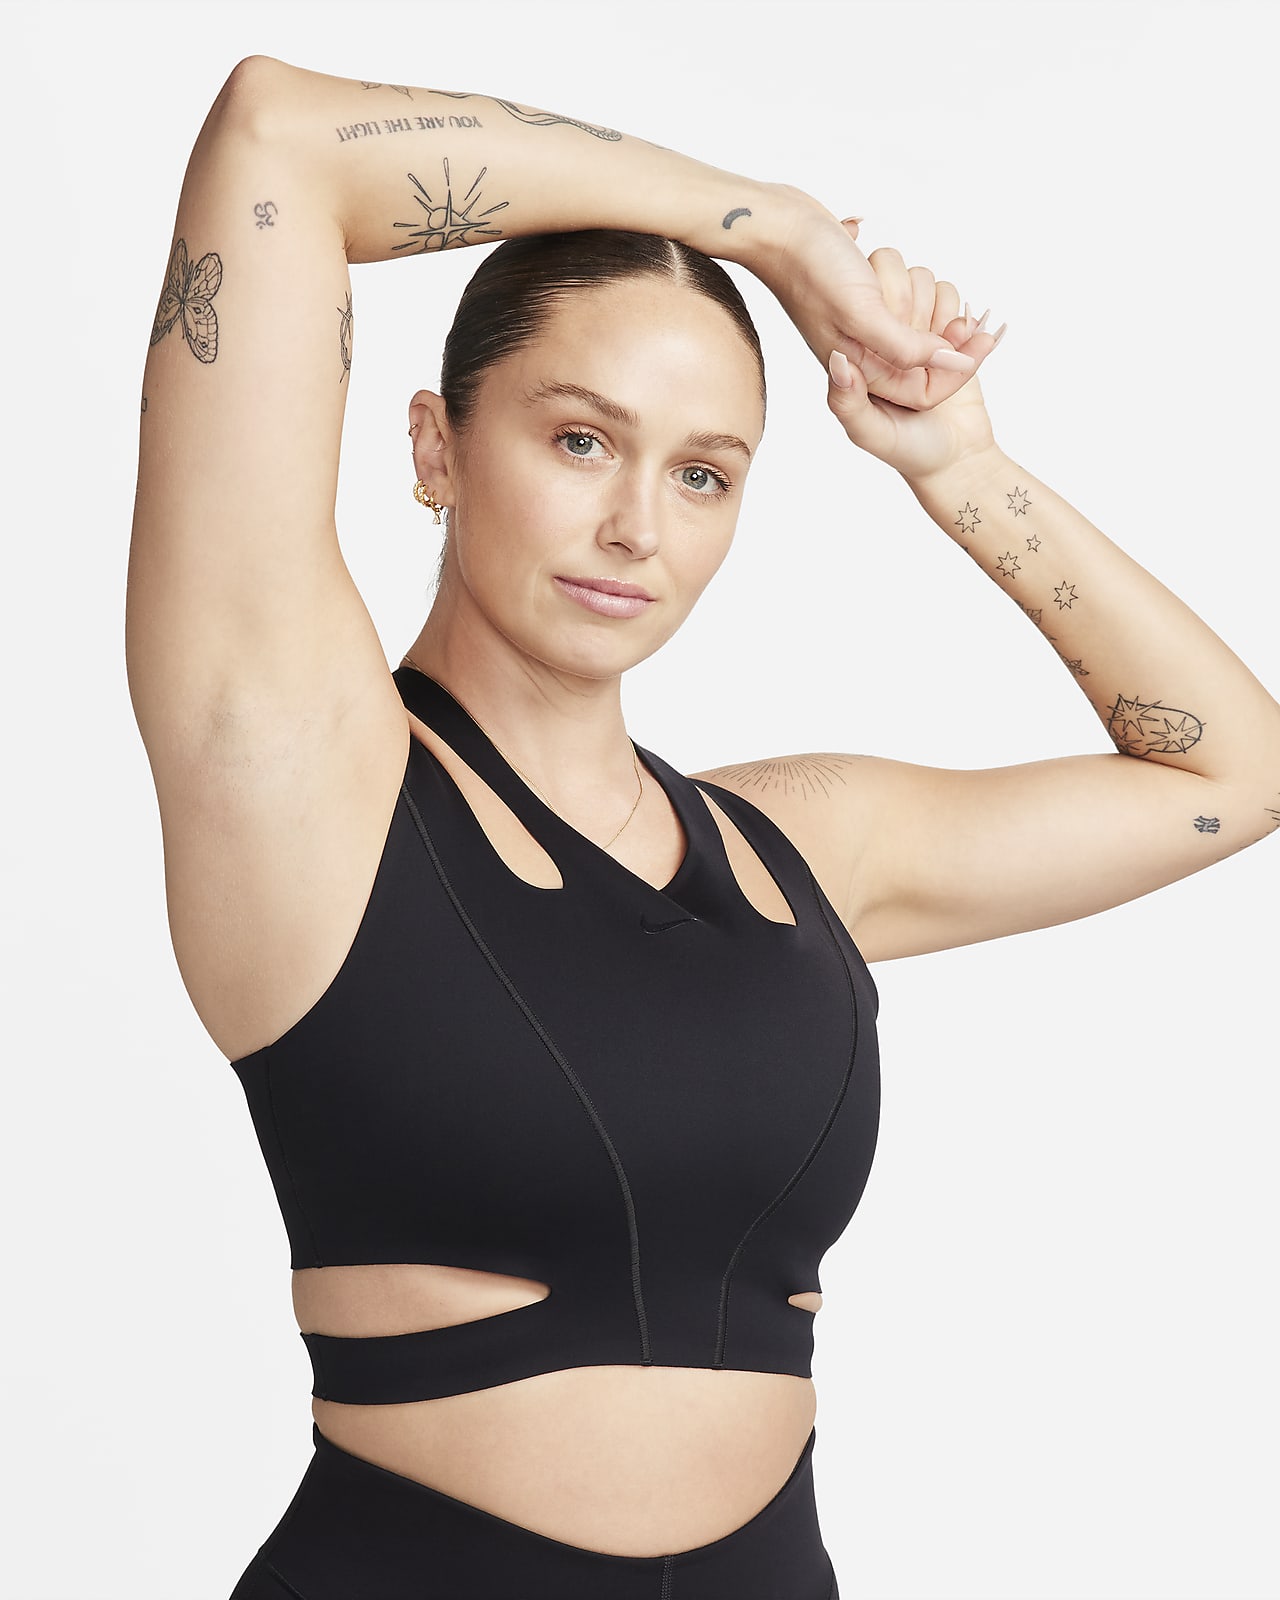 Nike FutureMove Women's Light-Support Non-Padded Strappy Sports Bra